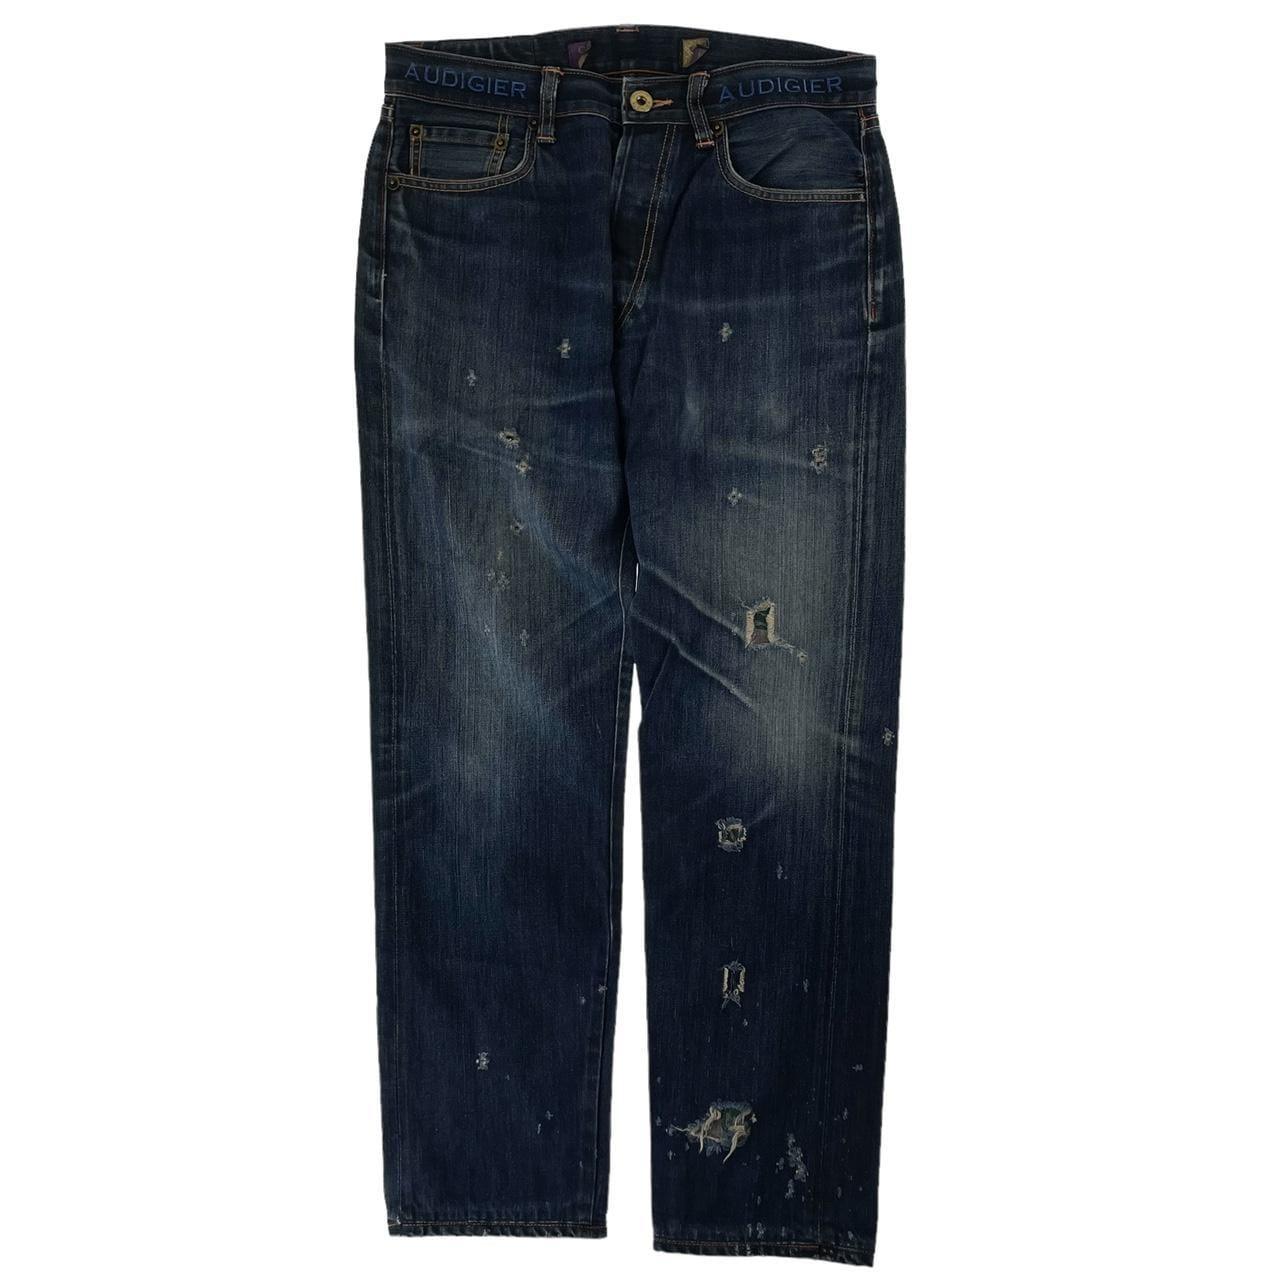 Vintage Christian Audigier denim jeans trousers W37 - Known Source